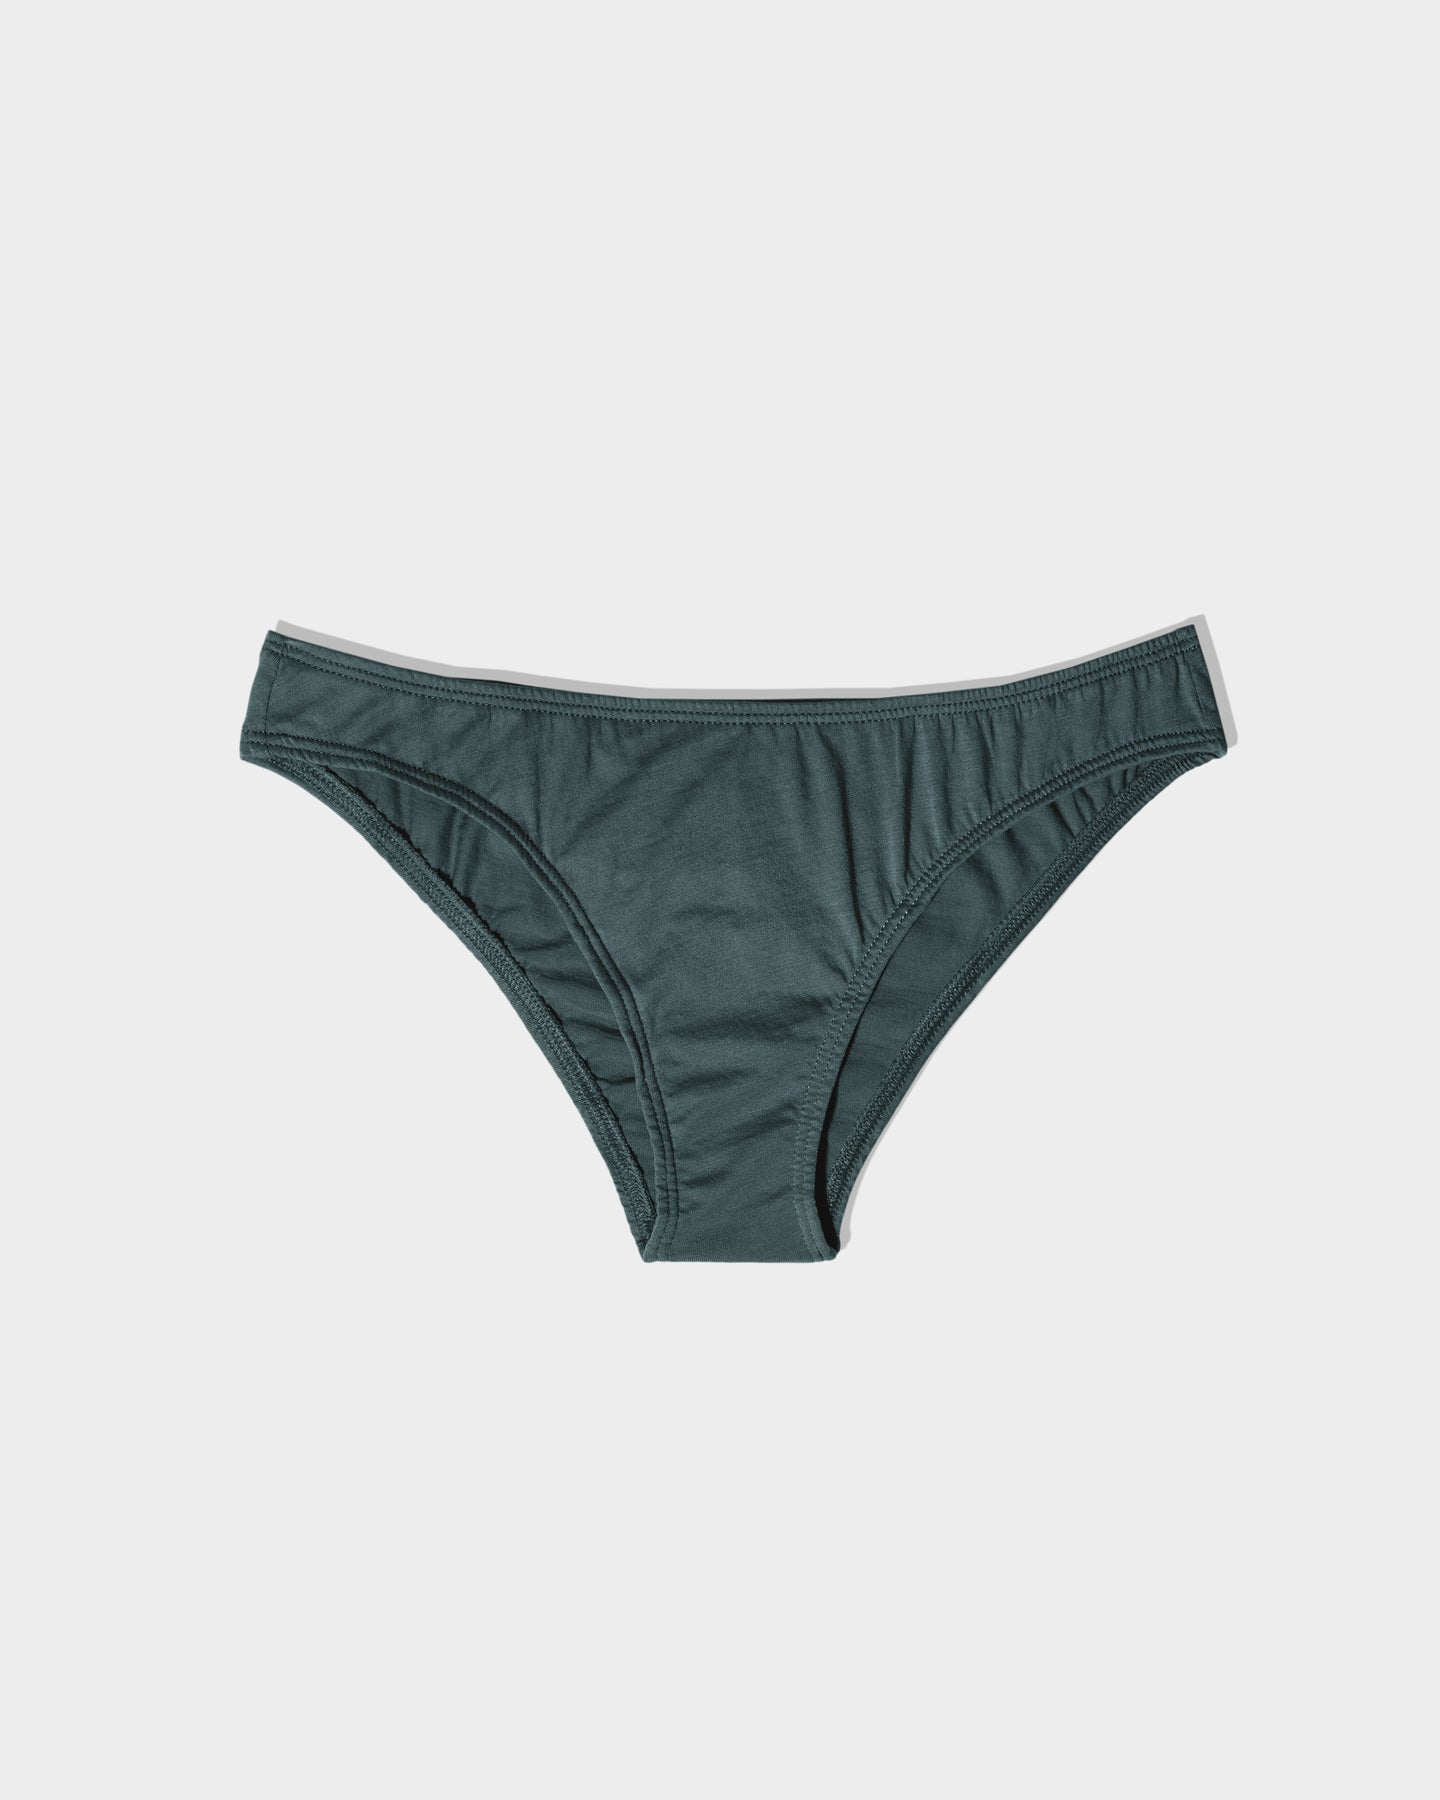 tanga − 100% organic cotton underwear, oddobody